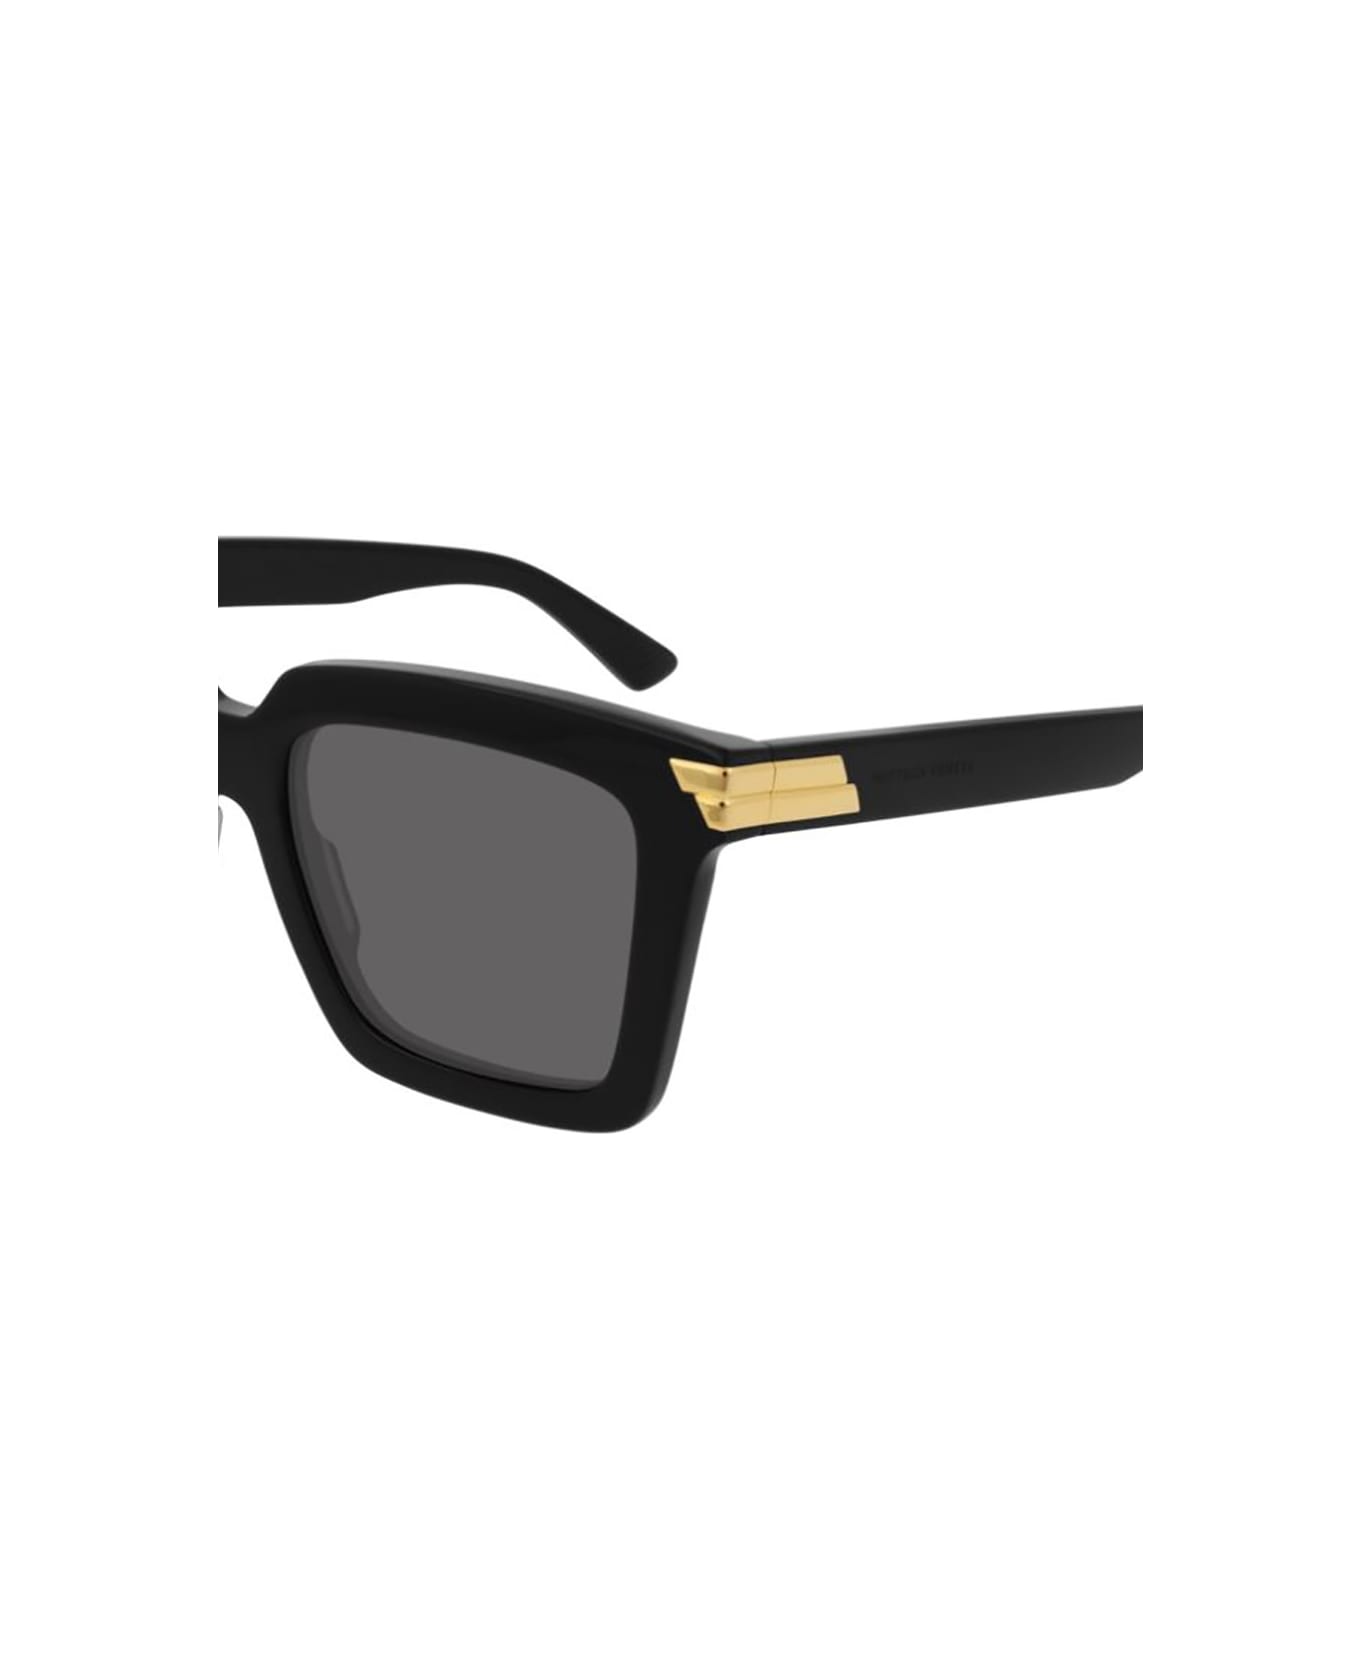 Bottega Veneta Eyewear 135q3on0a - Carrera 1033 s Polarised Sunglasses